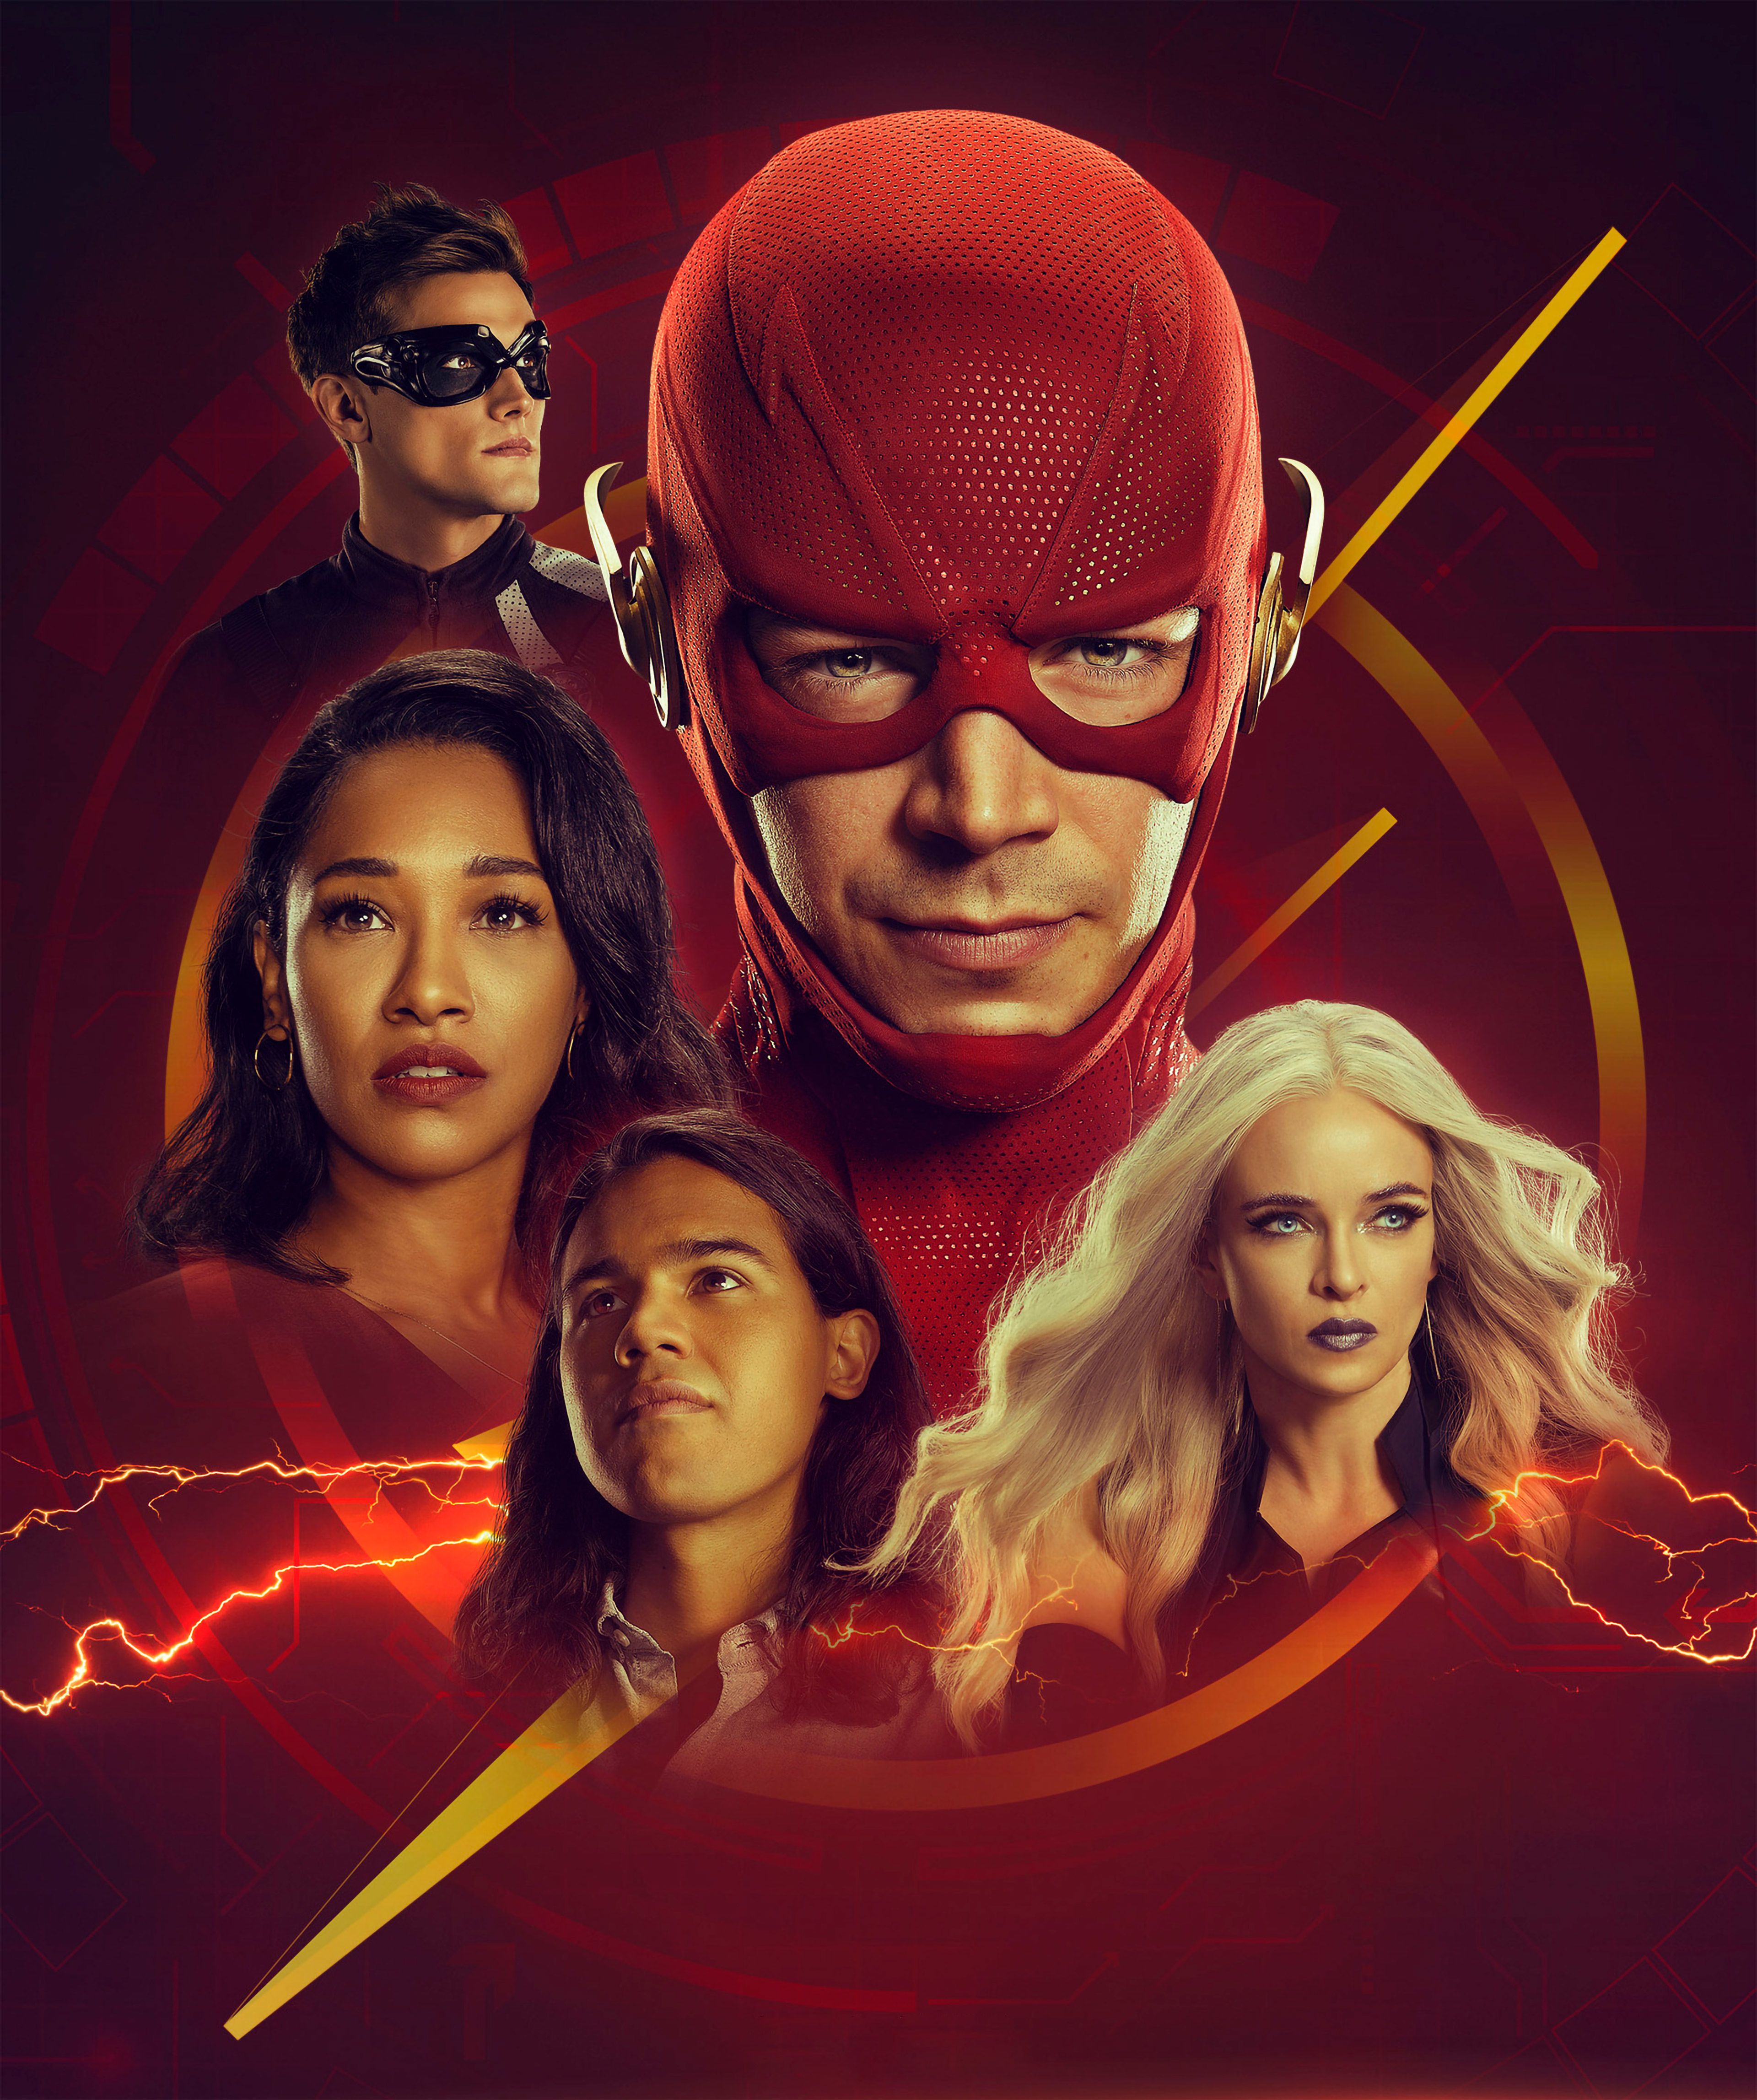 The Flash Season 6 Wallpaper, HD TV Series 4K Wallpaper, Image